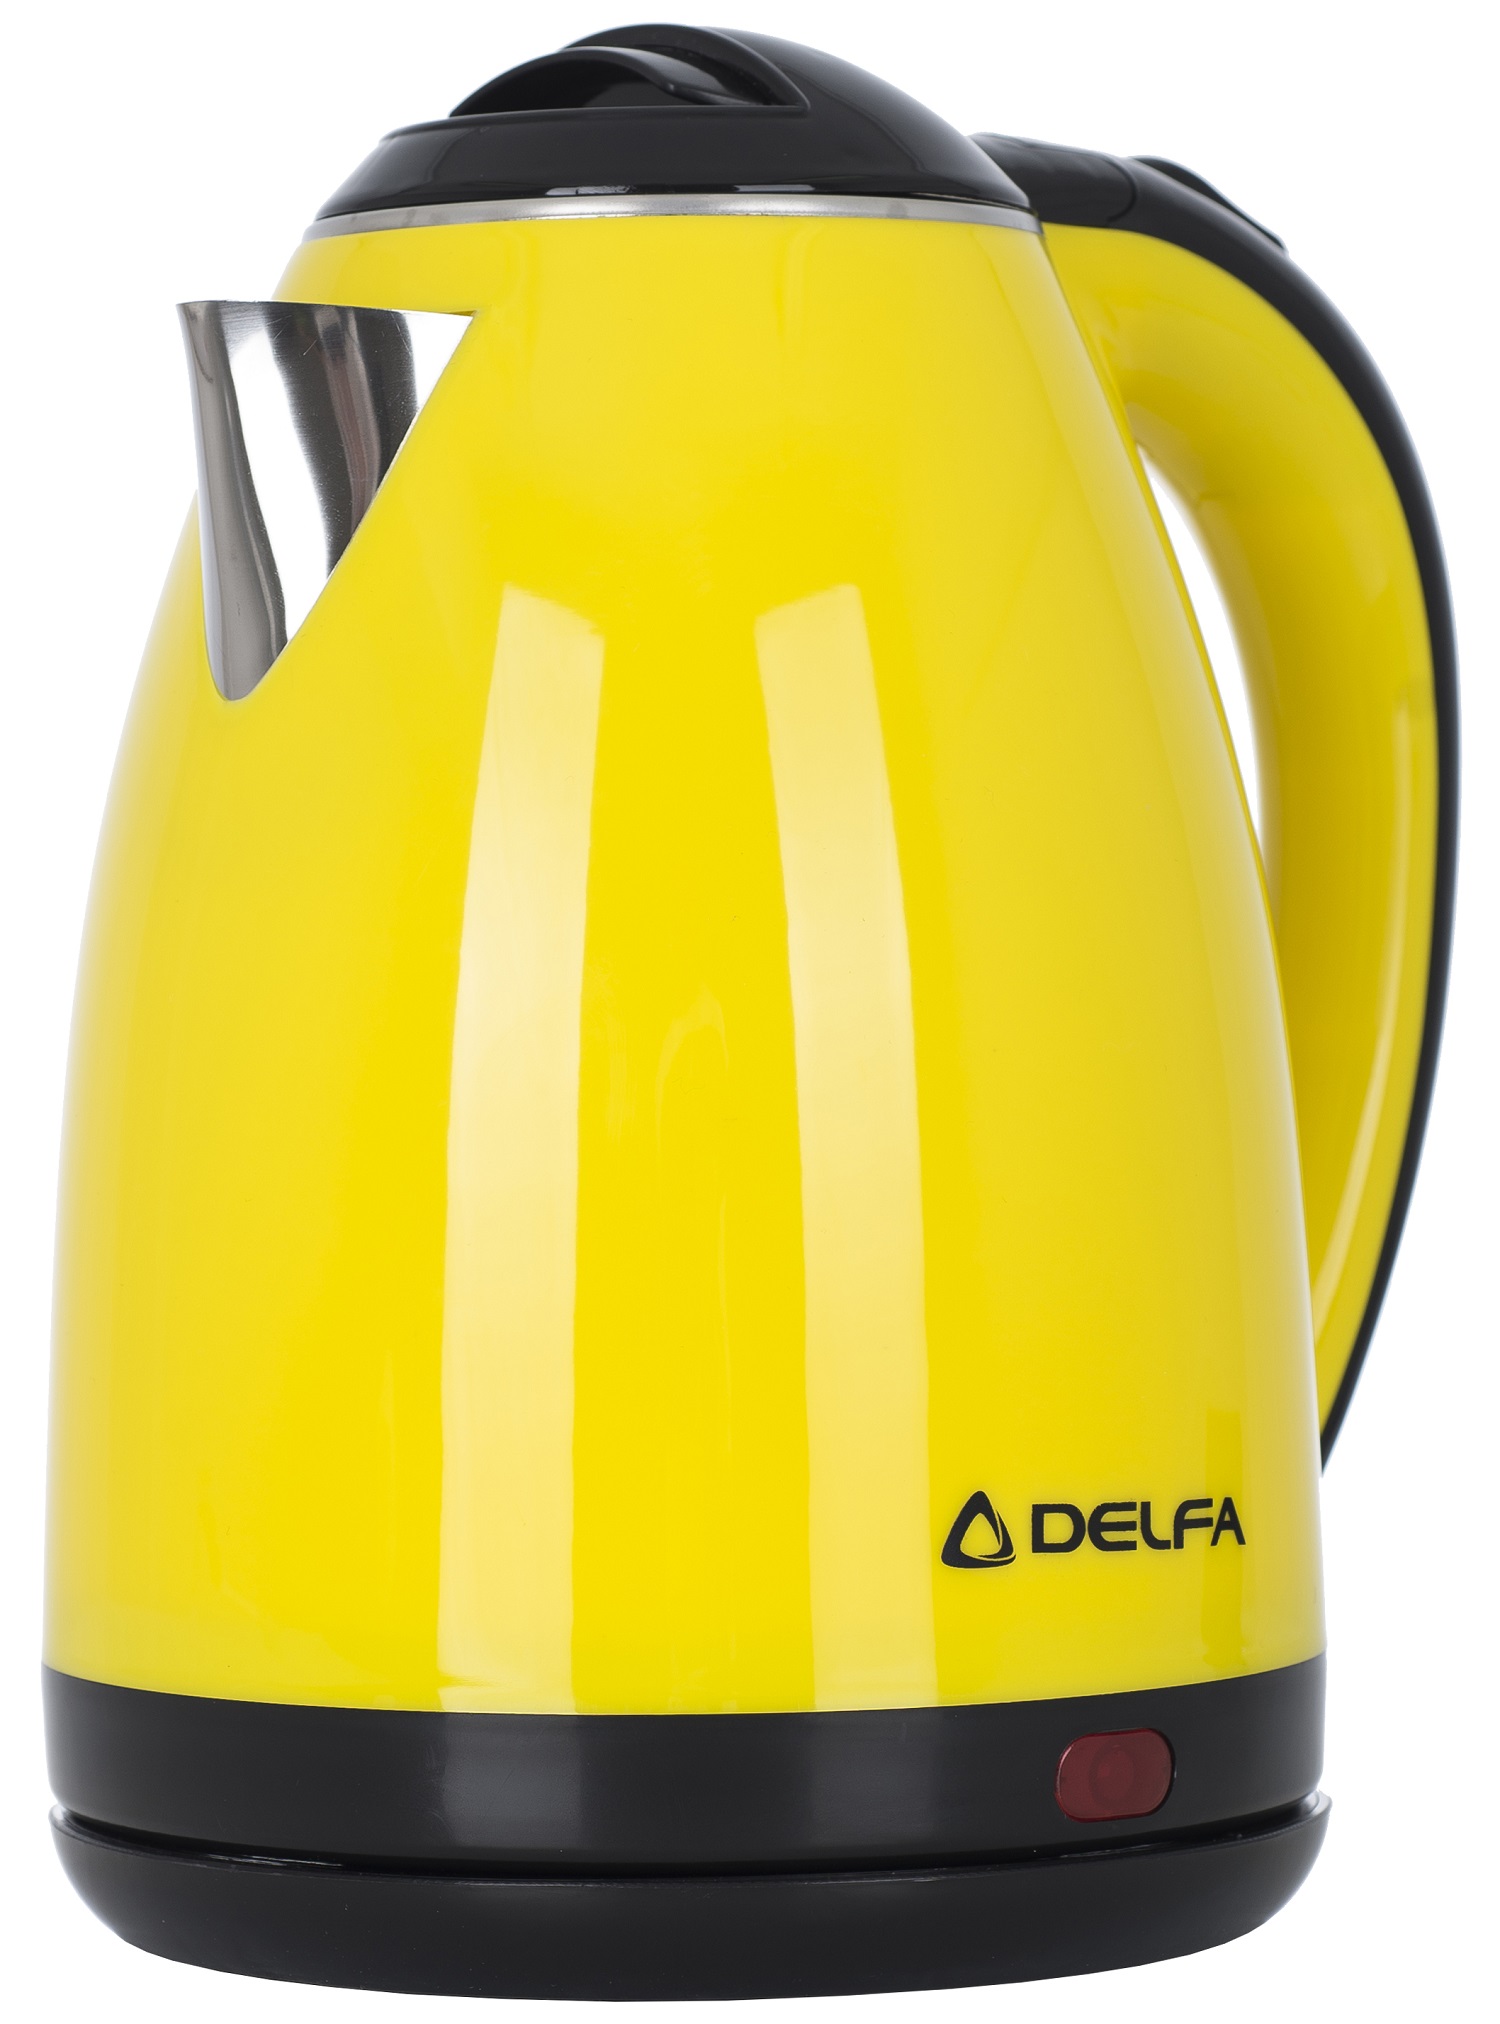 Delfa DK 3530 X Yellow